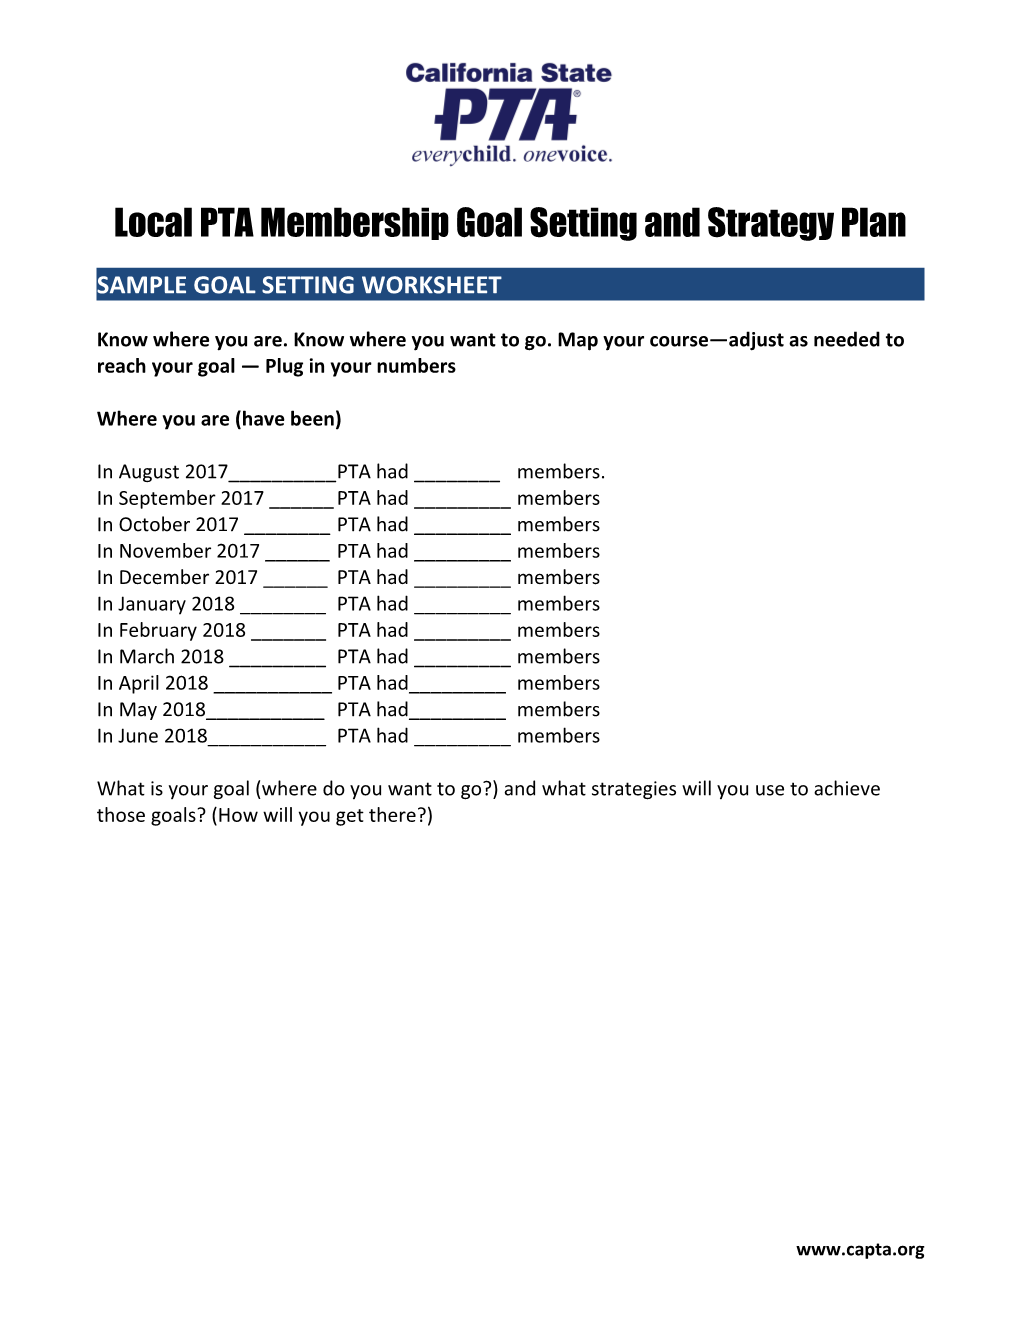 Local PTA Membership Goal Setting and Strategy Plan